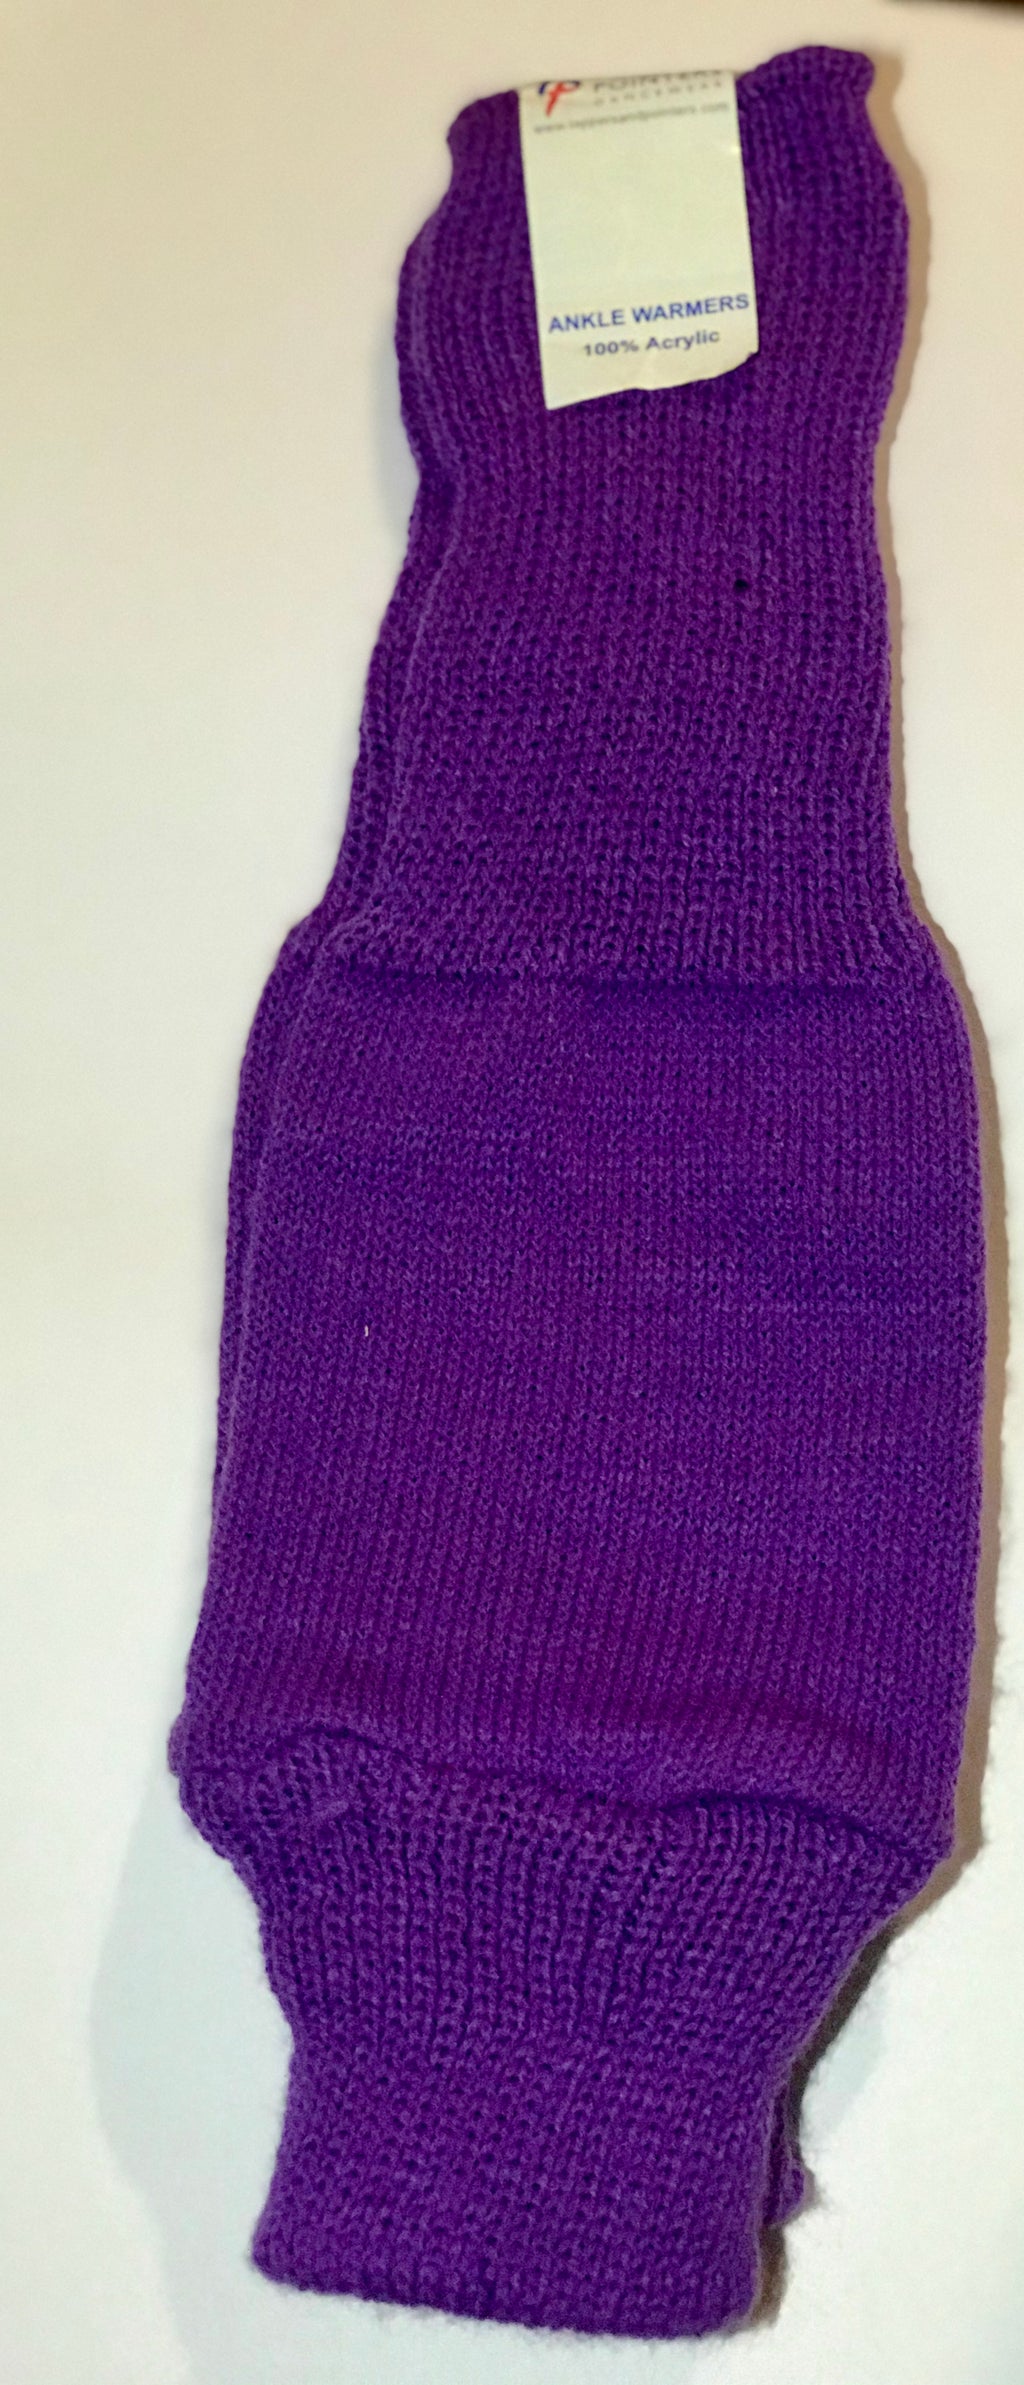 Ankle Warmers - Purple - Adults